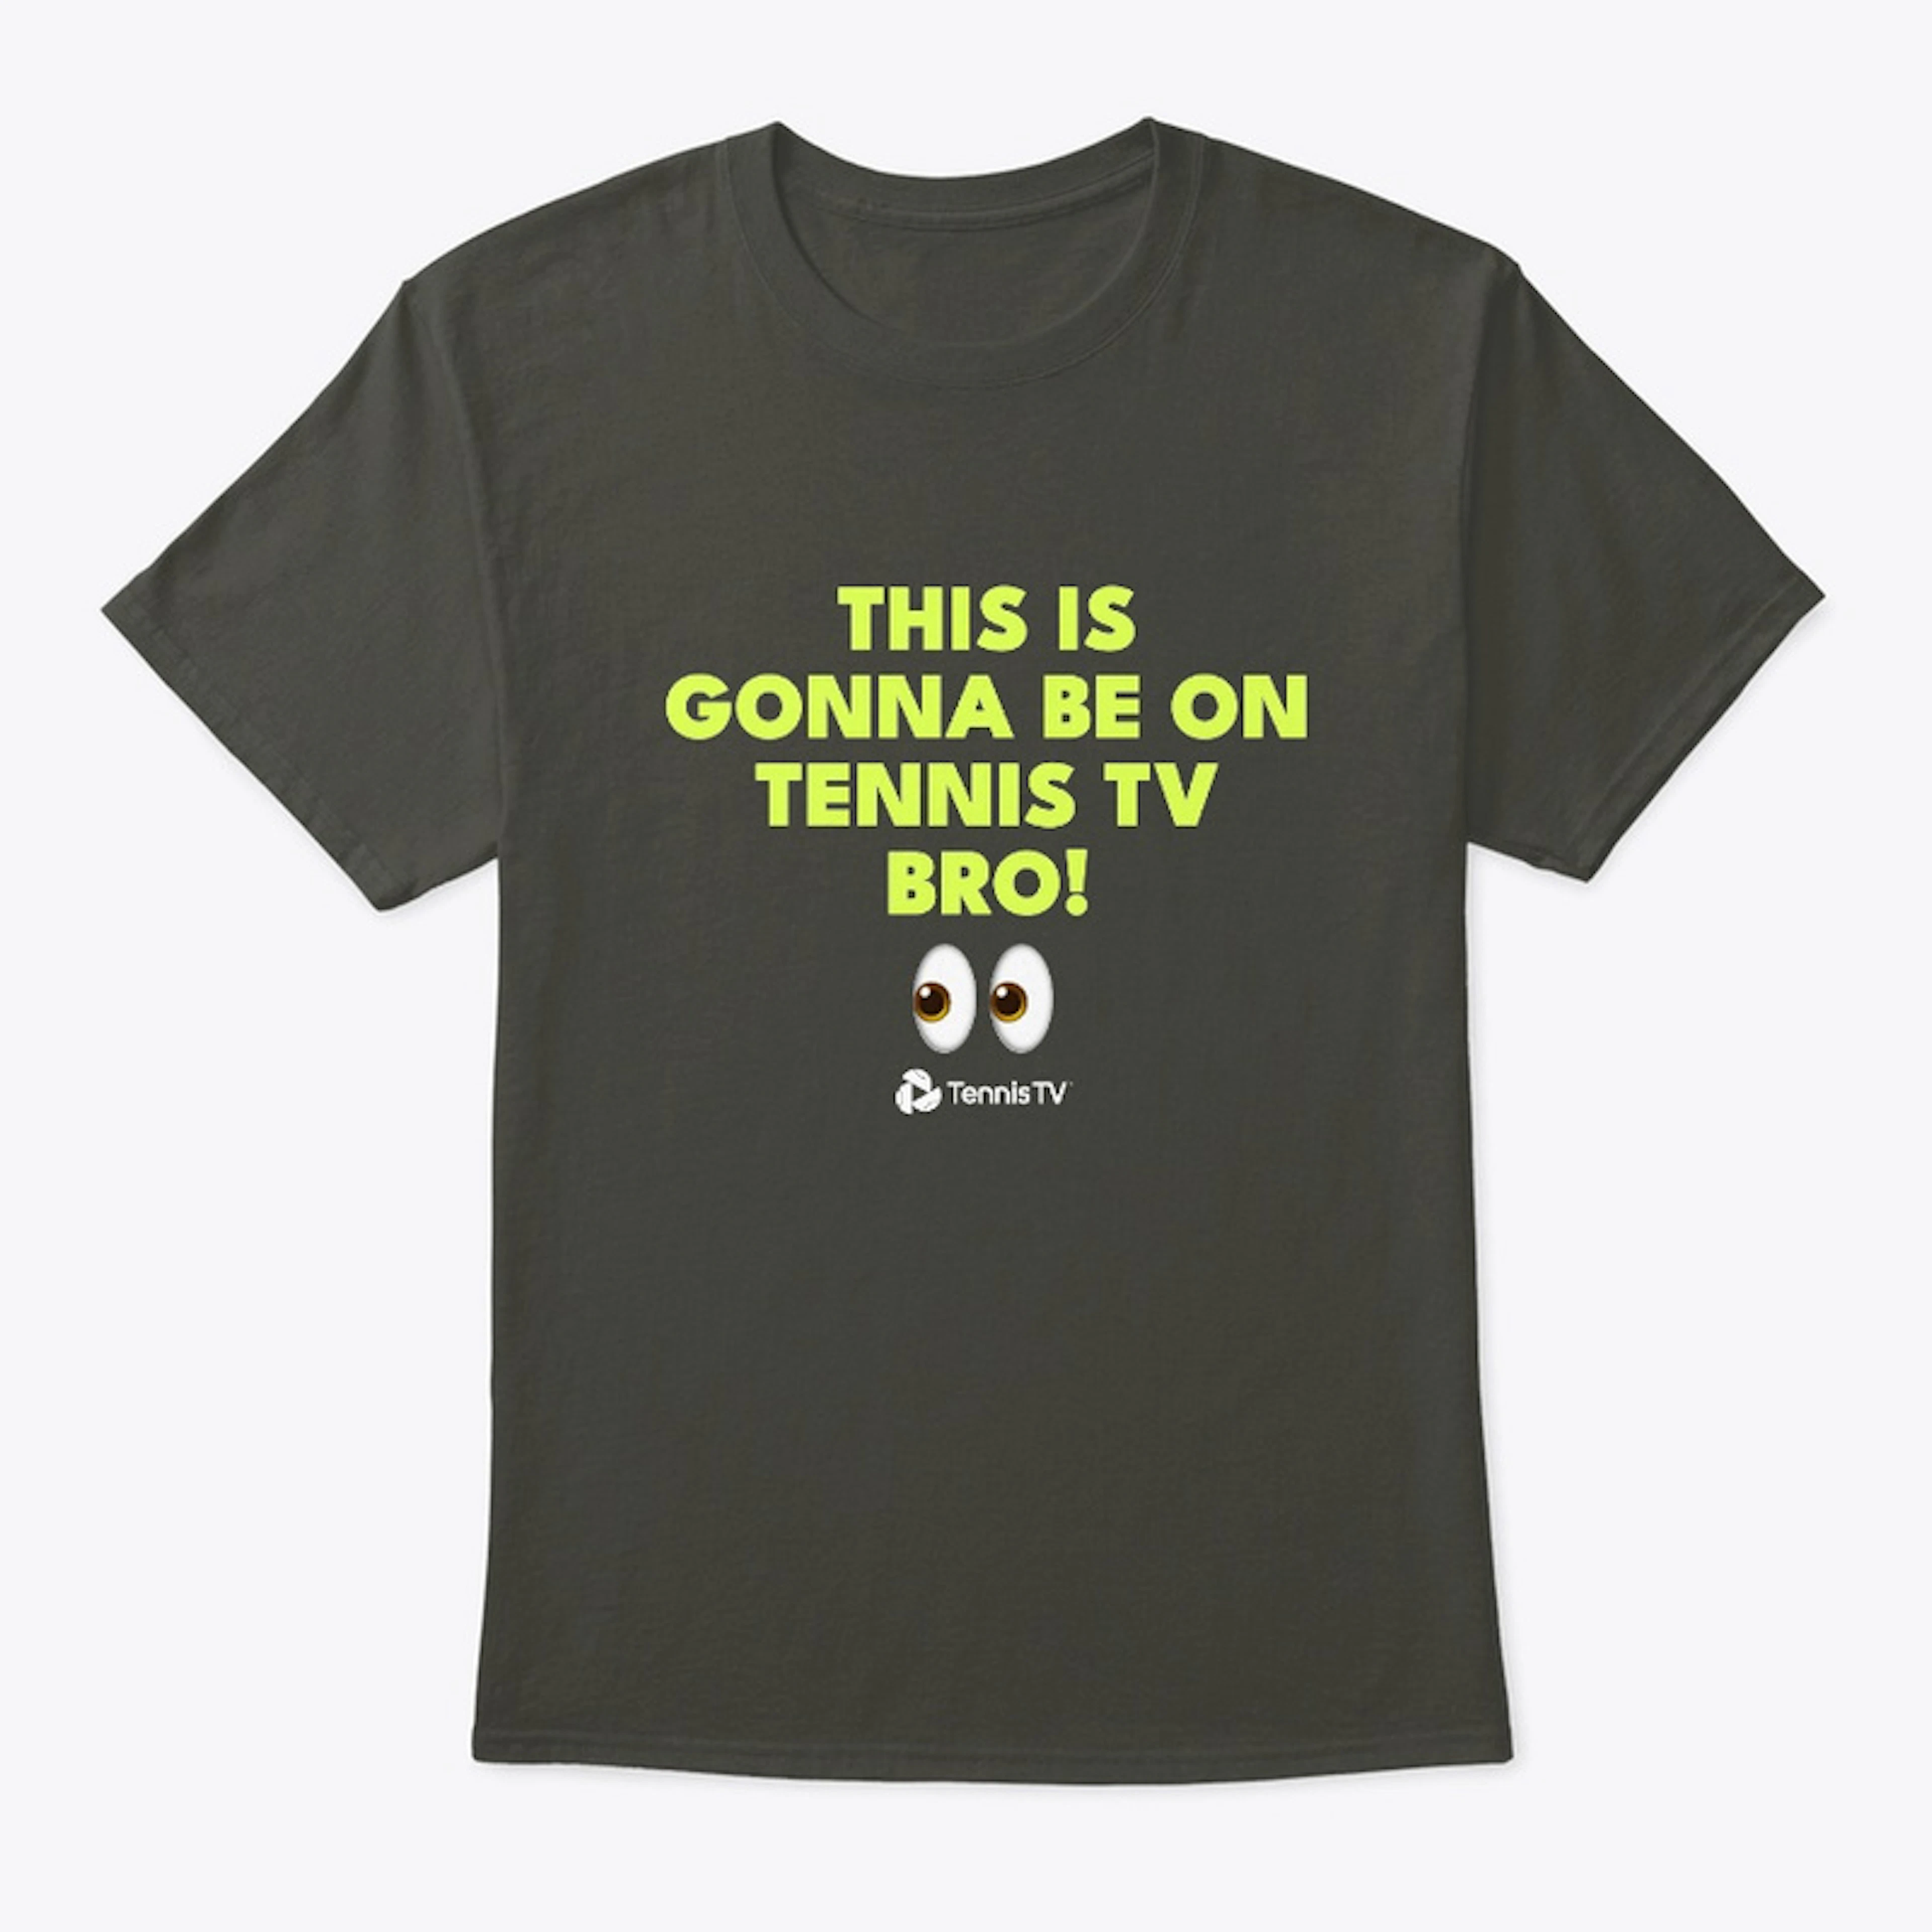 On Tennis TV Bro T-Shirt